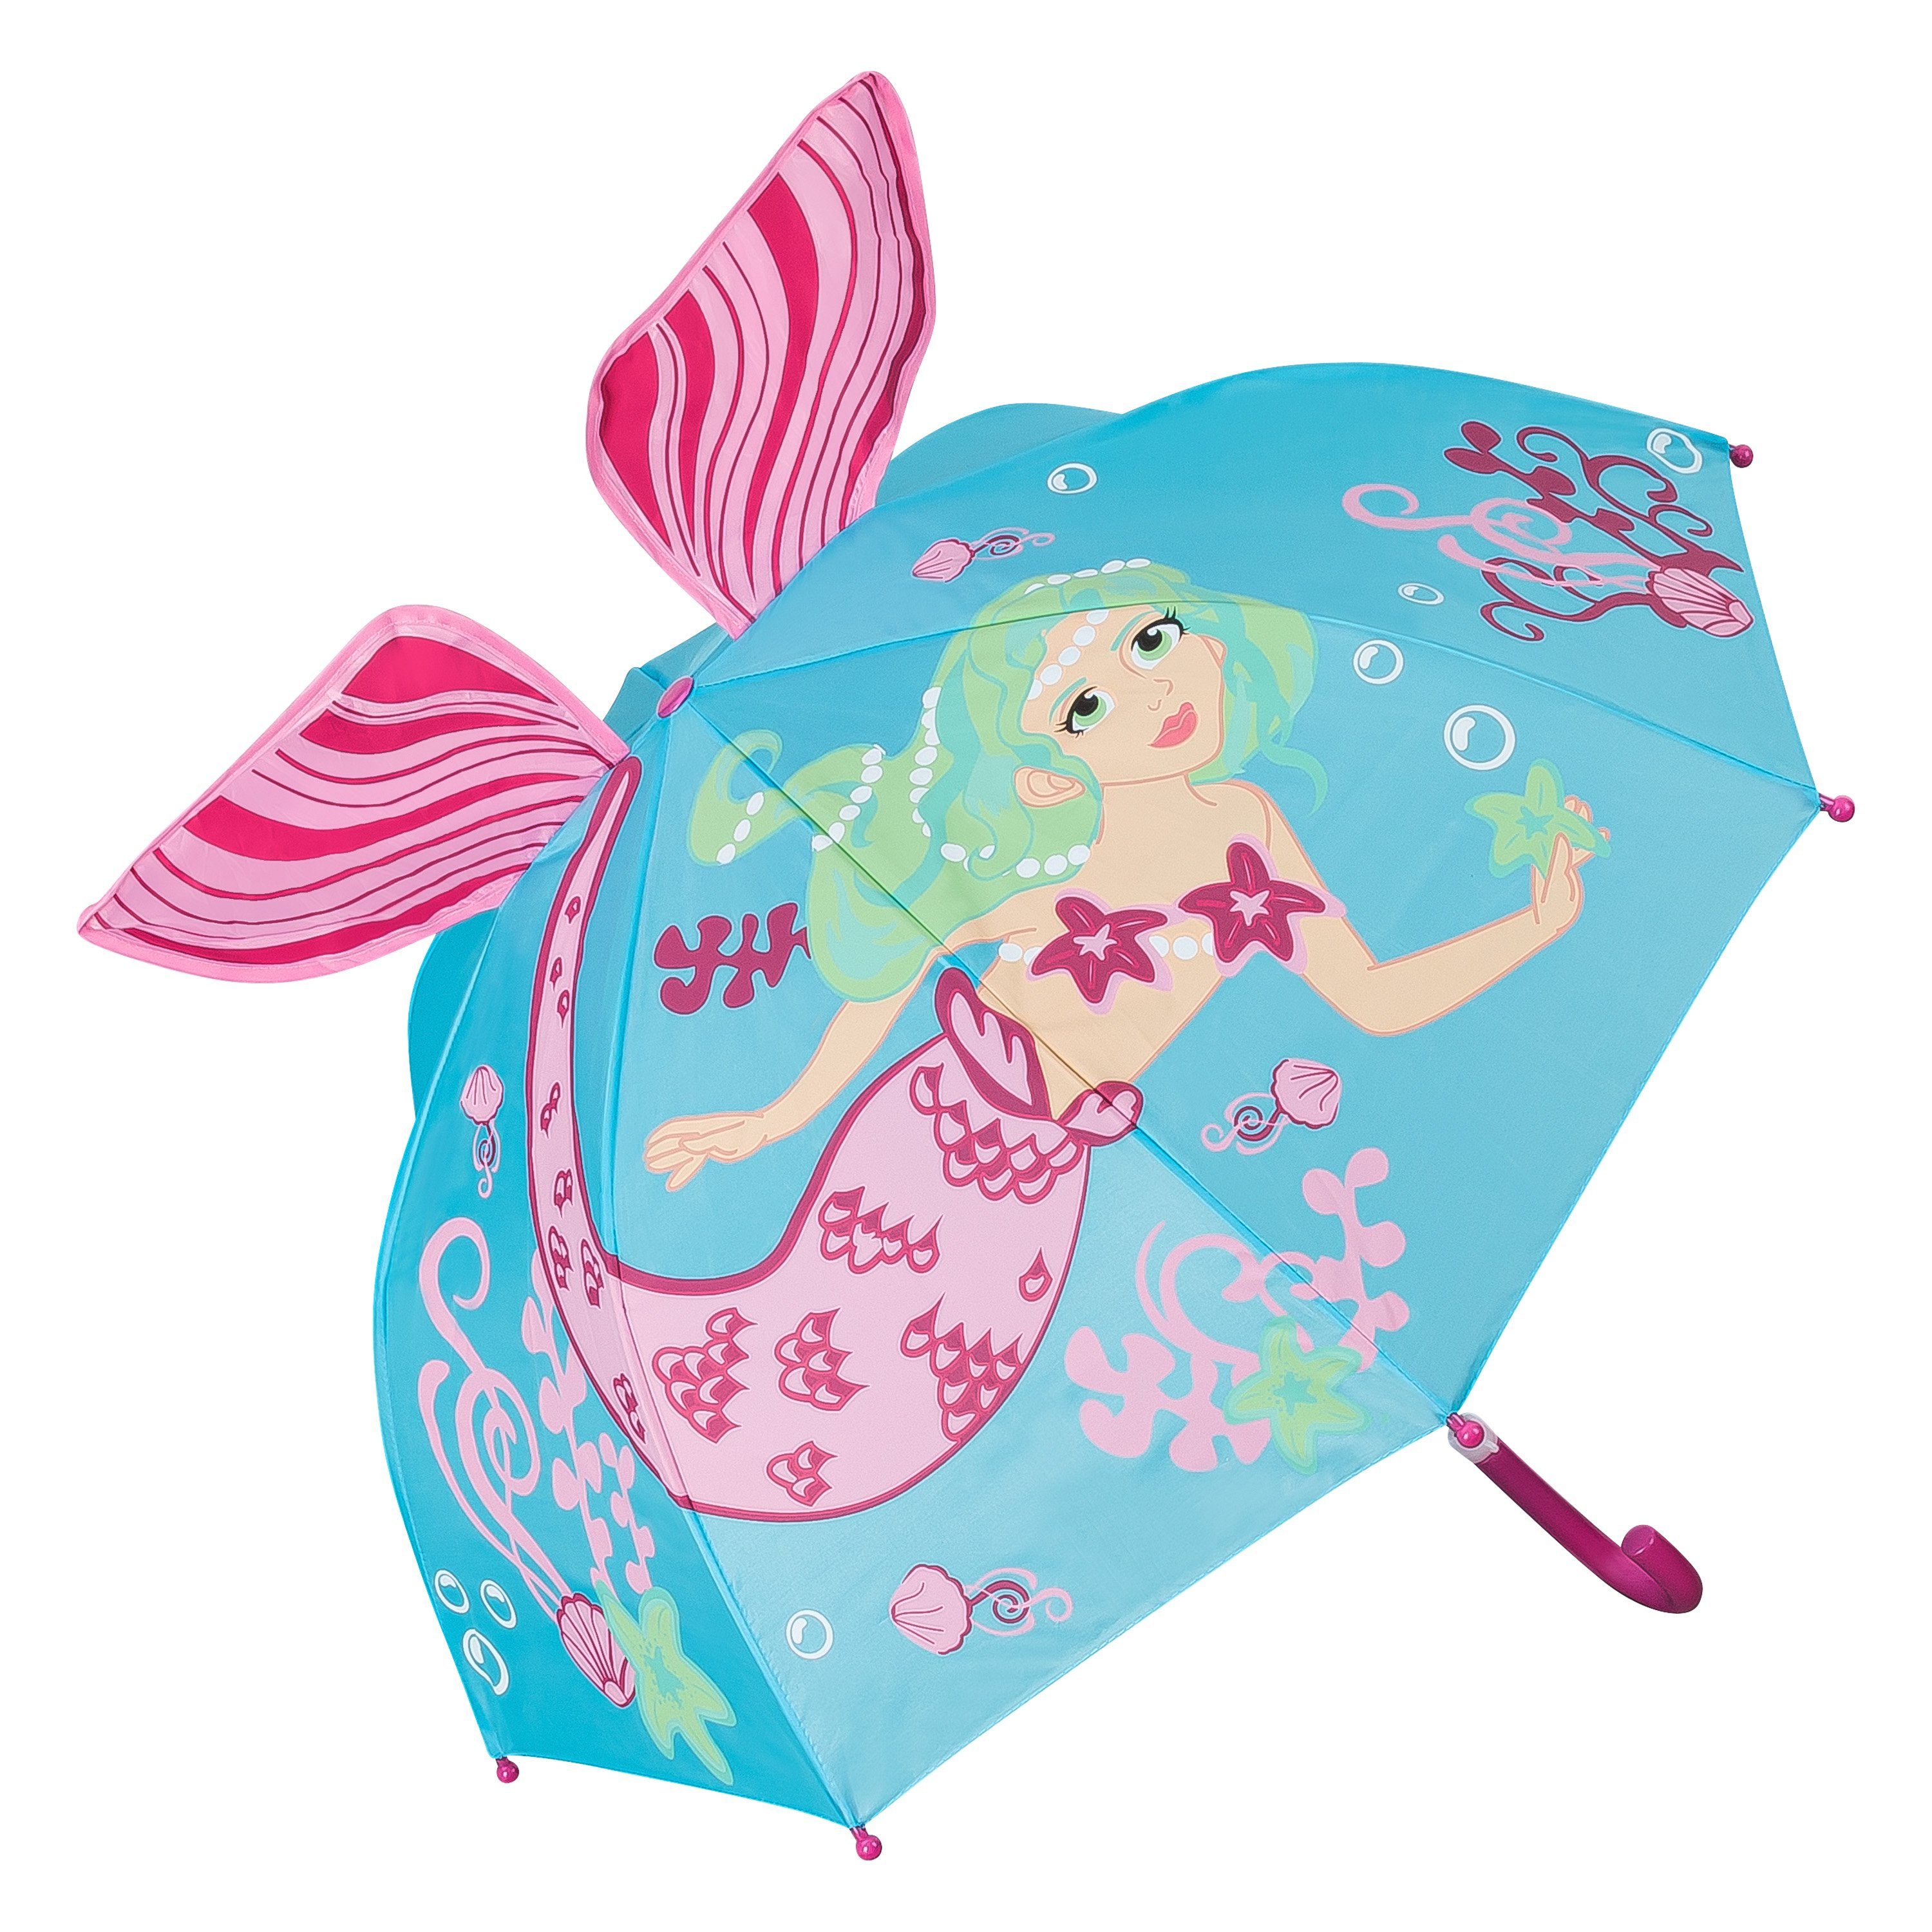 von Lilienfeld Stockregenschirm Kinderschirm Nixe Meerjungfrau Junge Mädchen bis ca. 8 Jahre, 3D